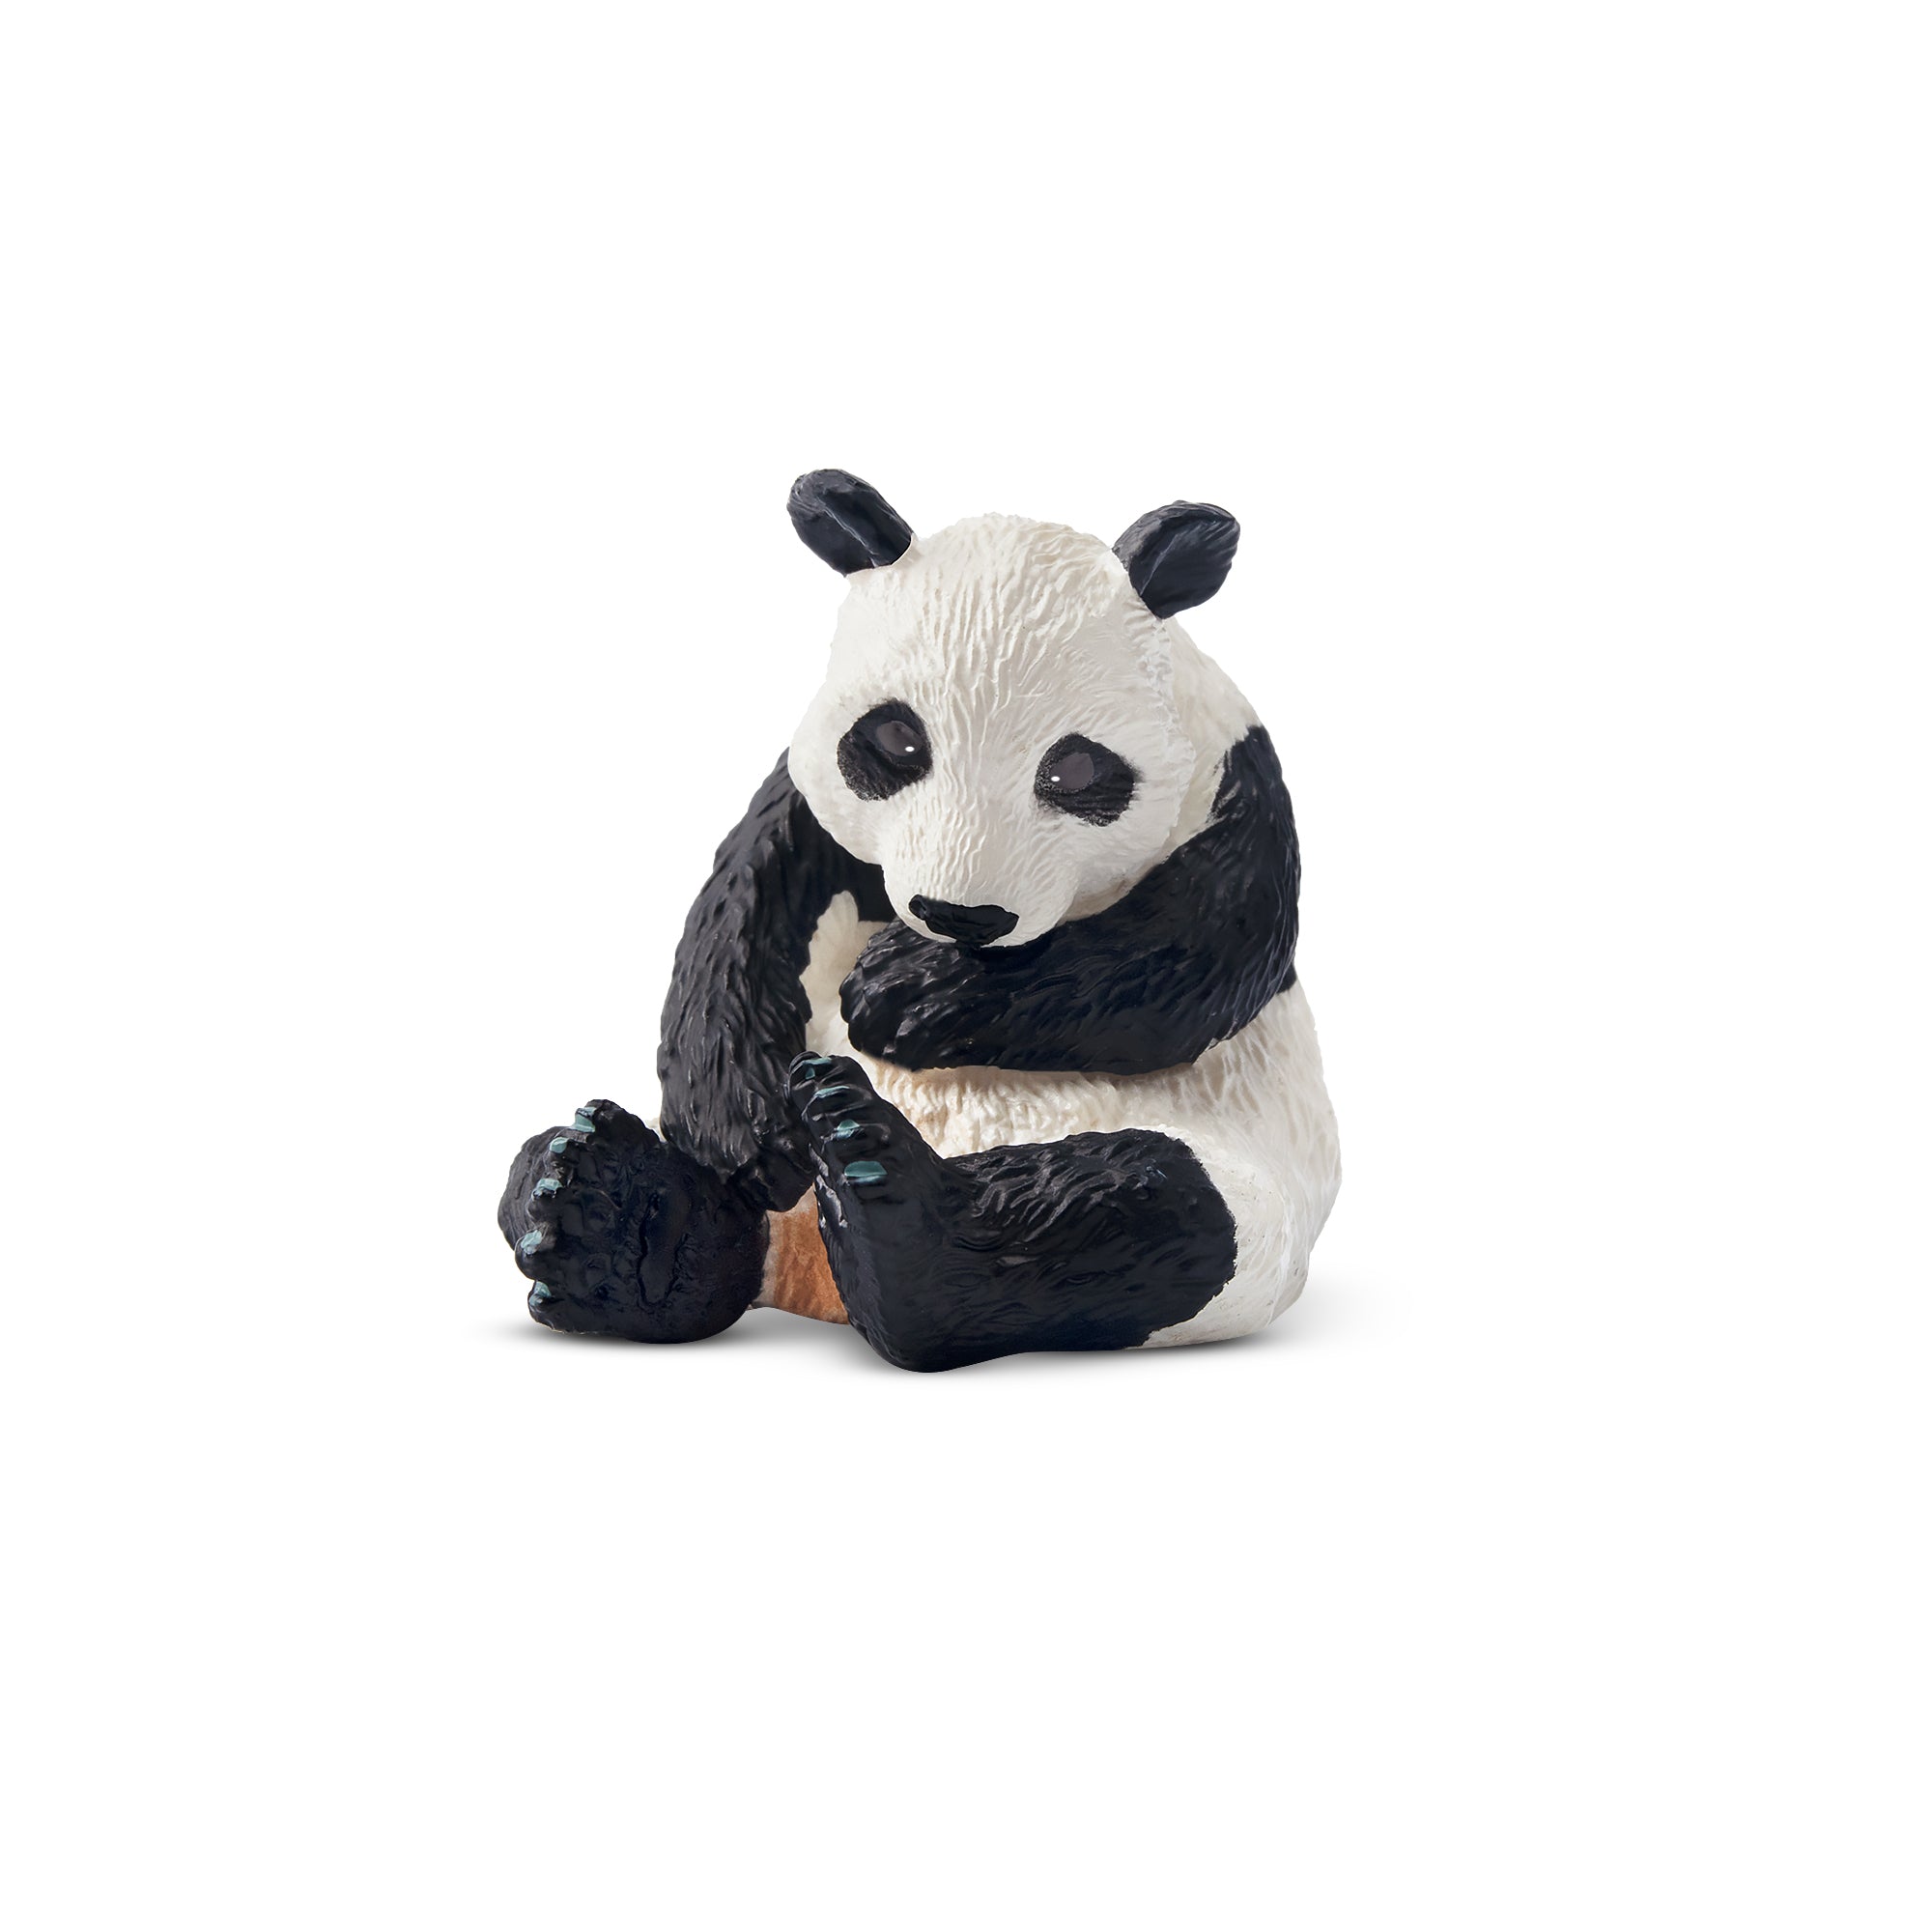 Toymany Napping Panda Cub Figurine Toy-2